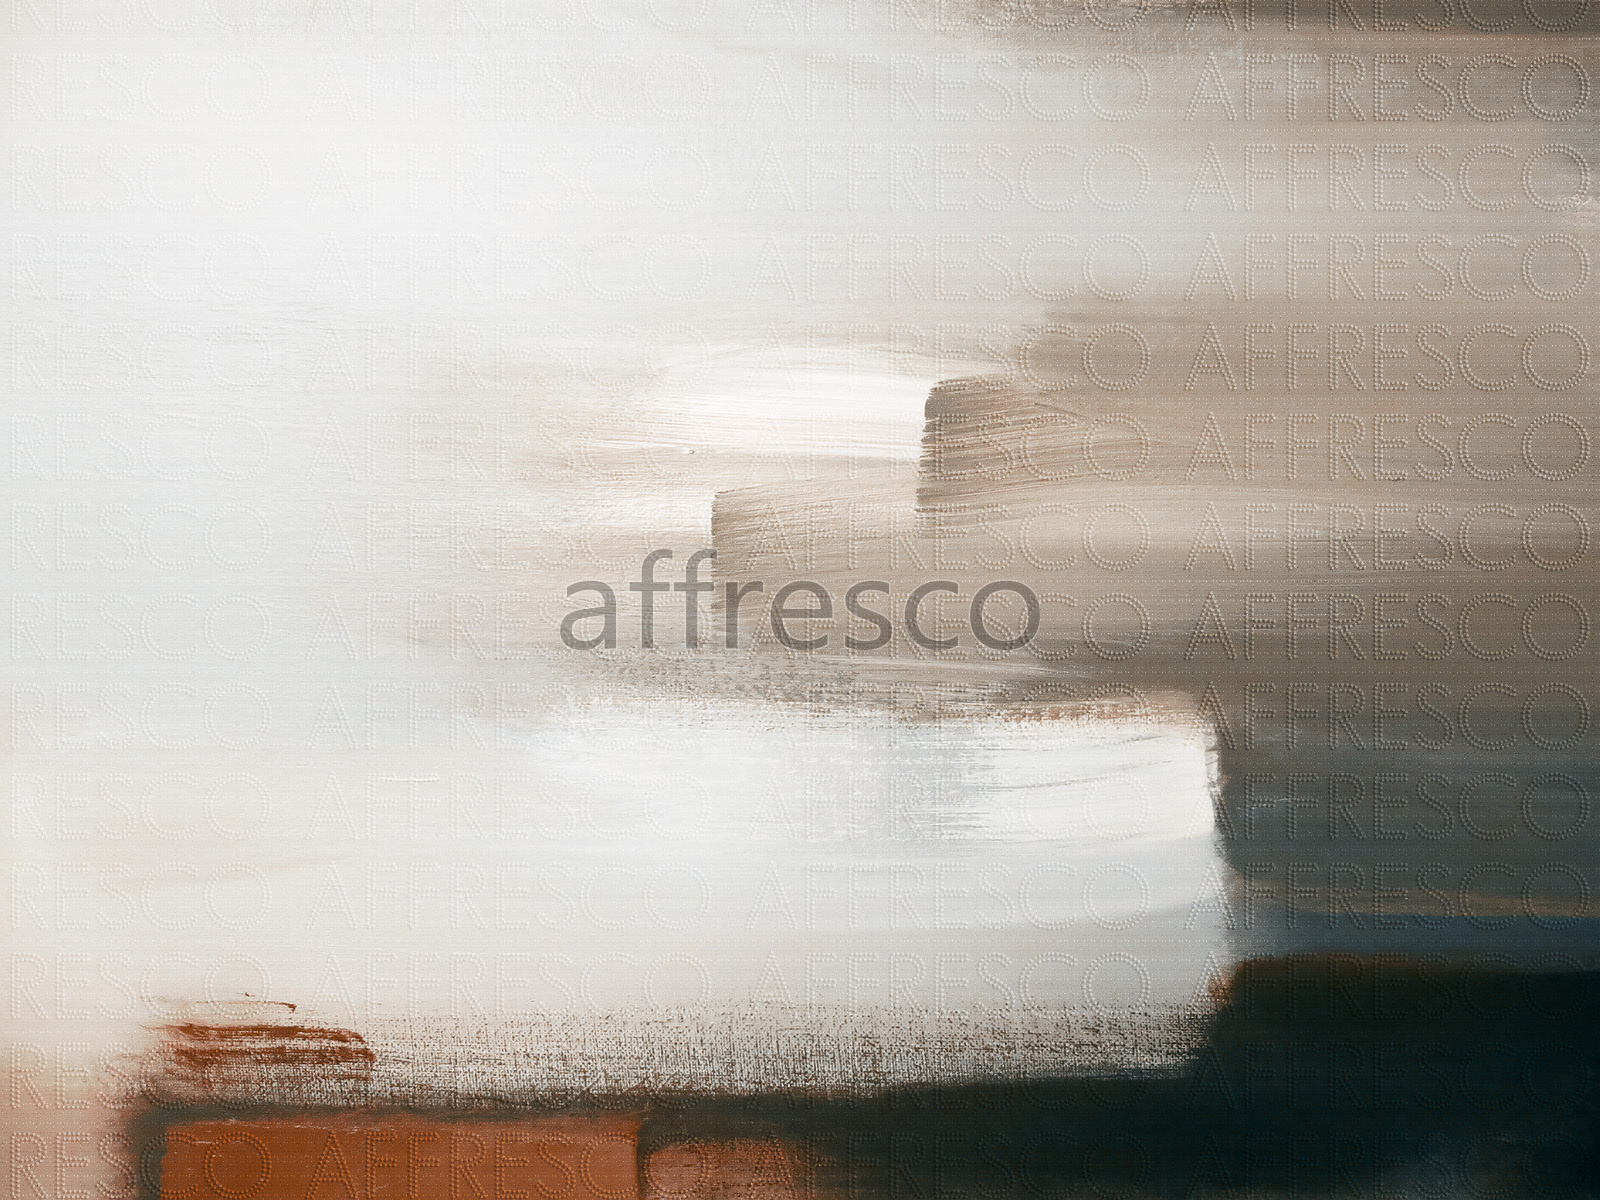 RE810-COL4 | Fine Art | Affresco Factory